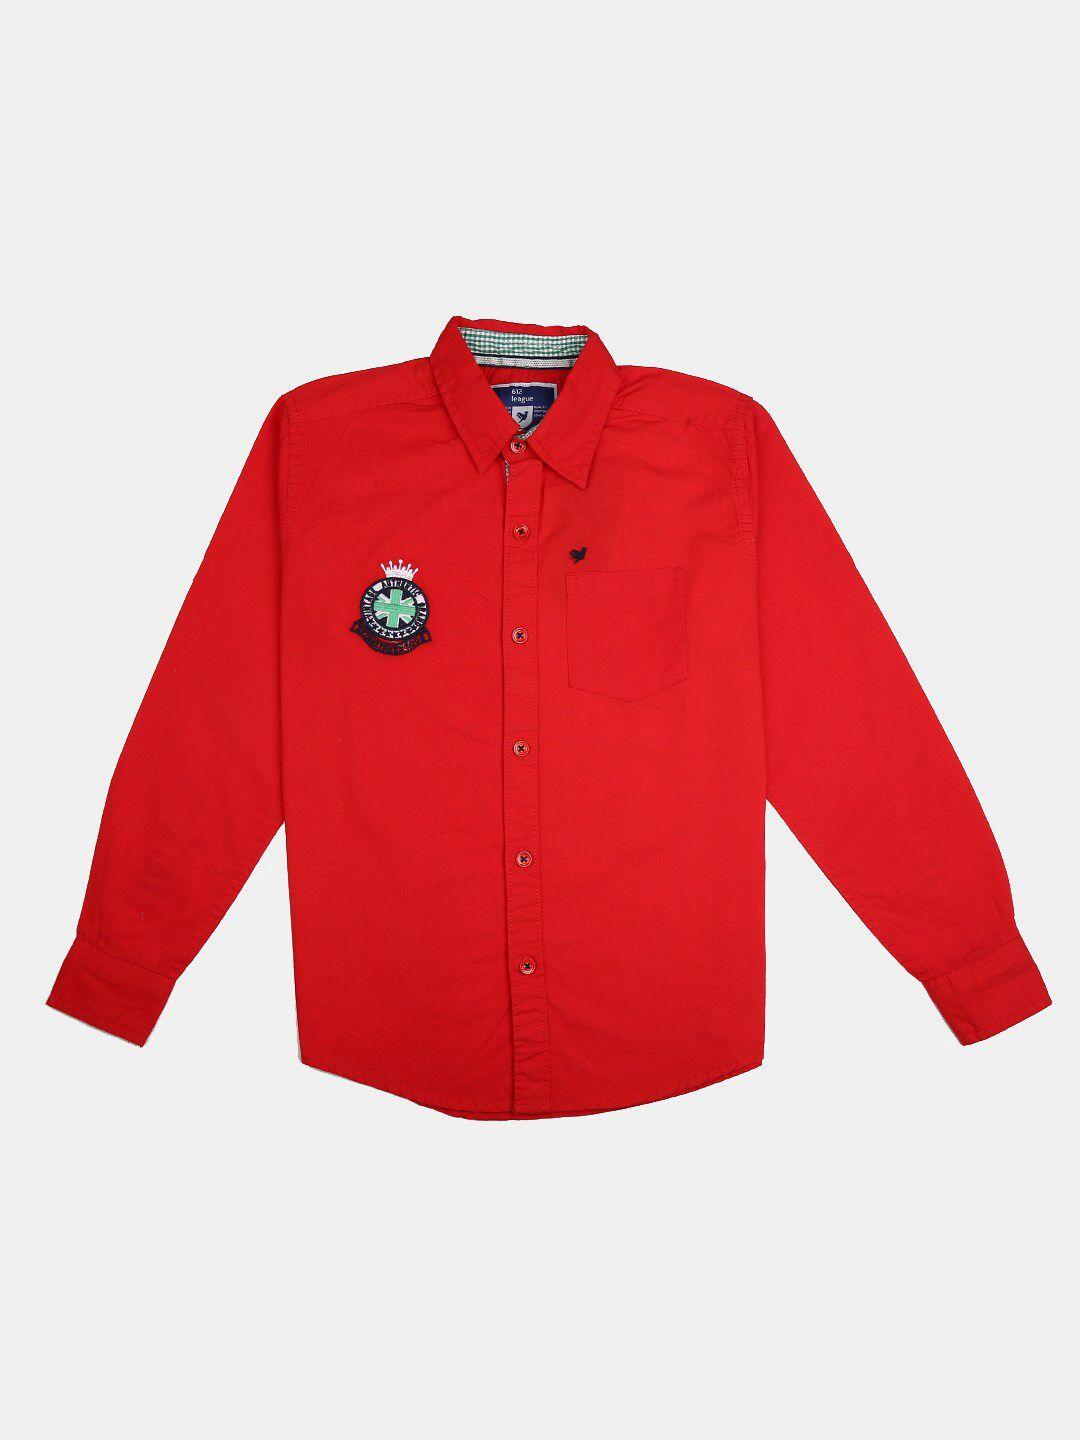 v-mart boys red casual shirt